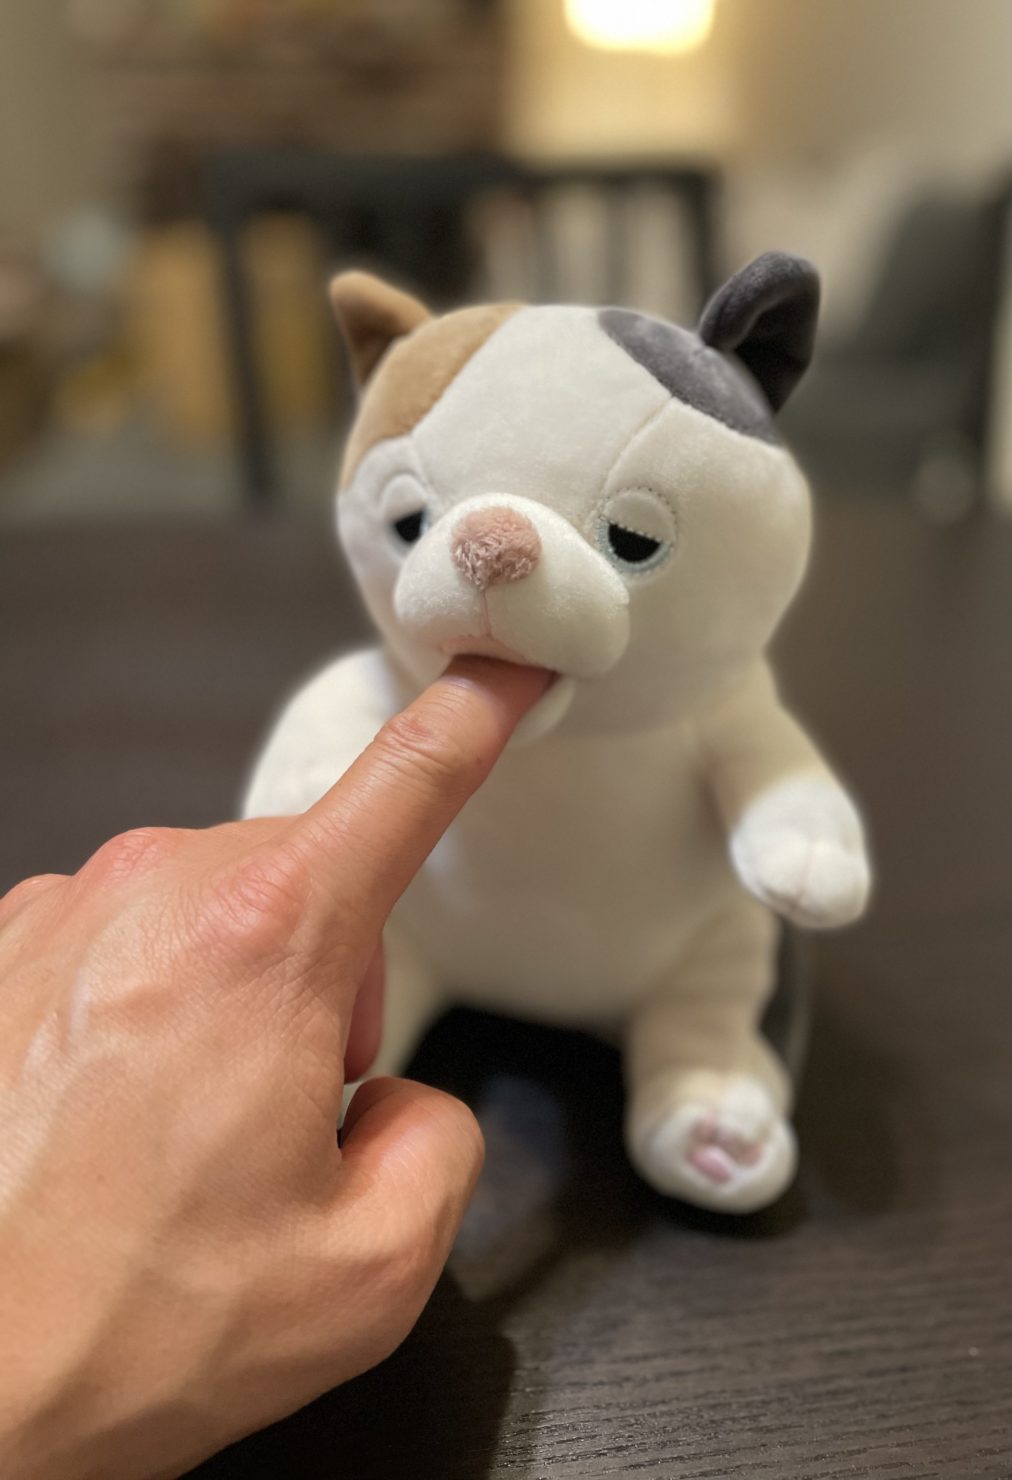 Yukai Engineering's cute stuffed animal robot will nibble on your finger